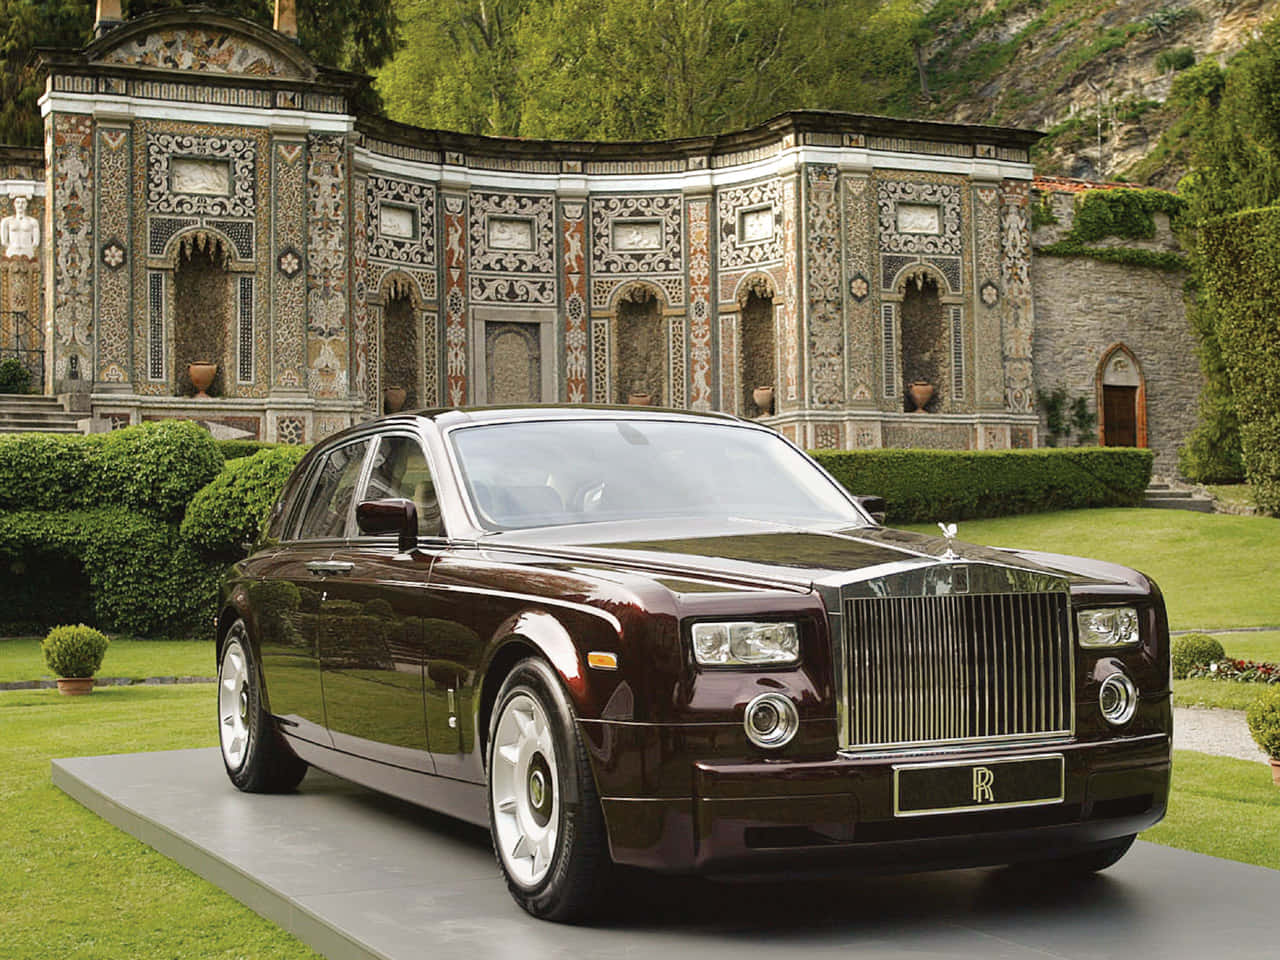 Caption: Luxury Redefined - The Rolls Royce Phantom Wallpaper